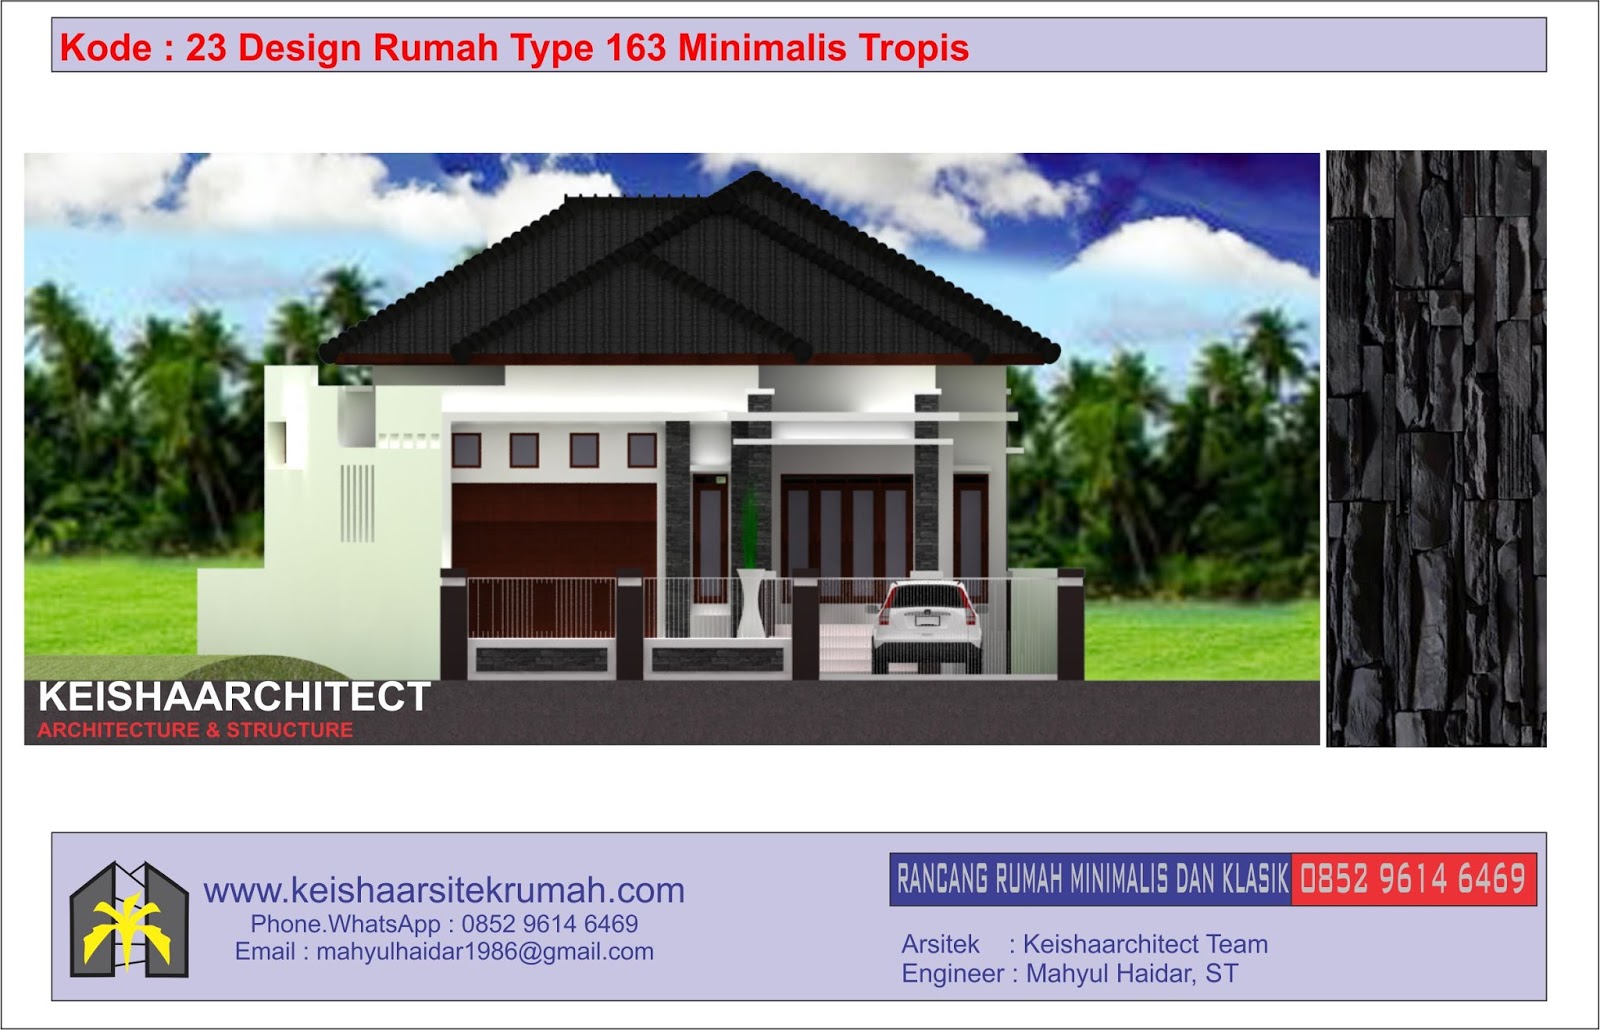 Kode 23 Design Rumah Type 163 Minimalis Tropis Lokasi Banda Aceh